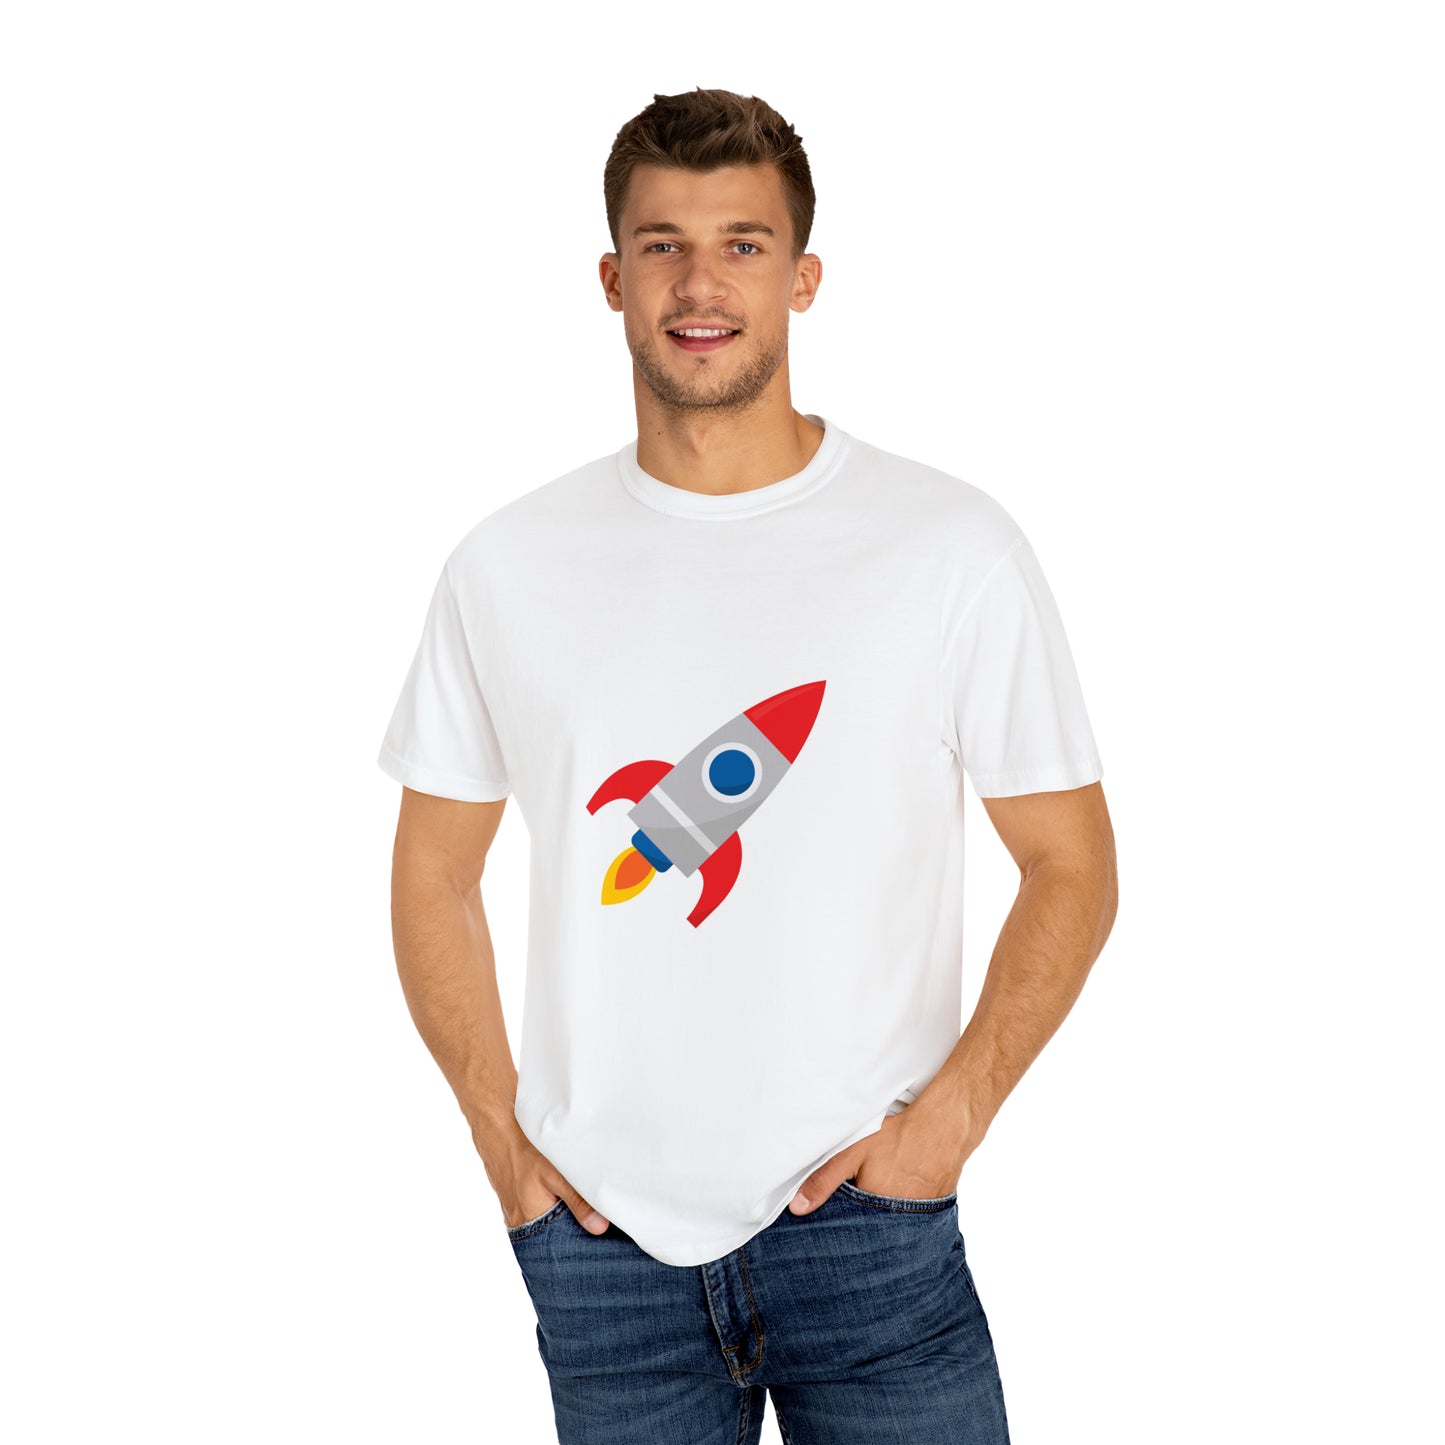 Rocket - Up Up and Away T-Shirt